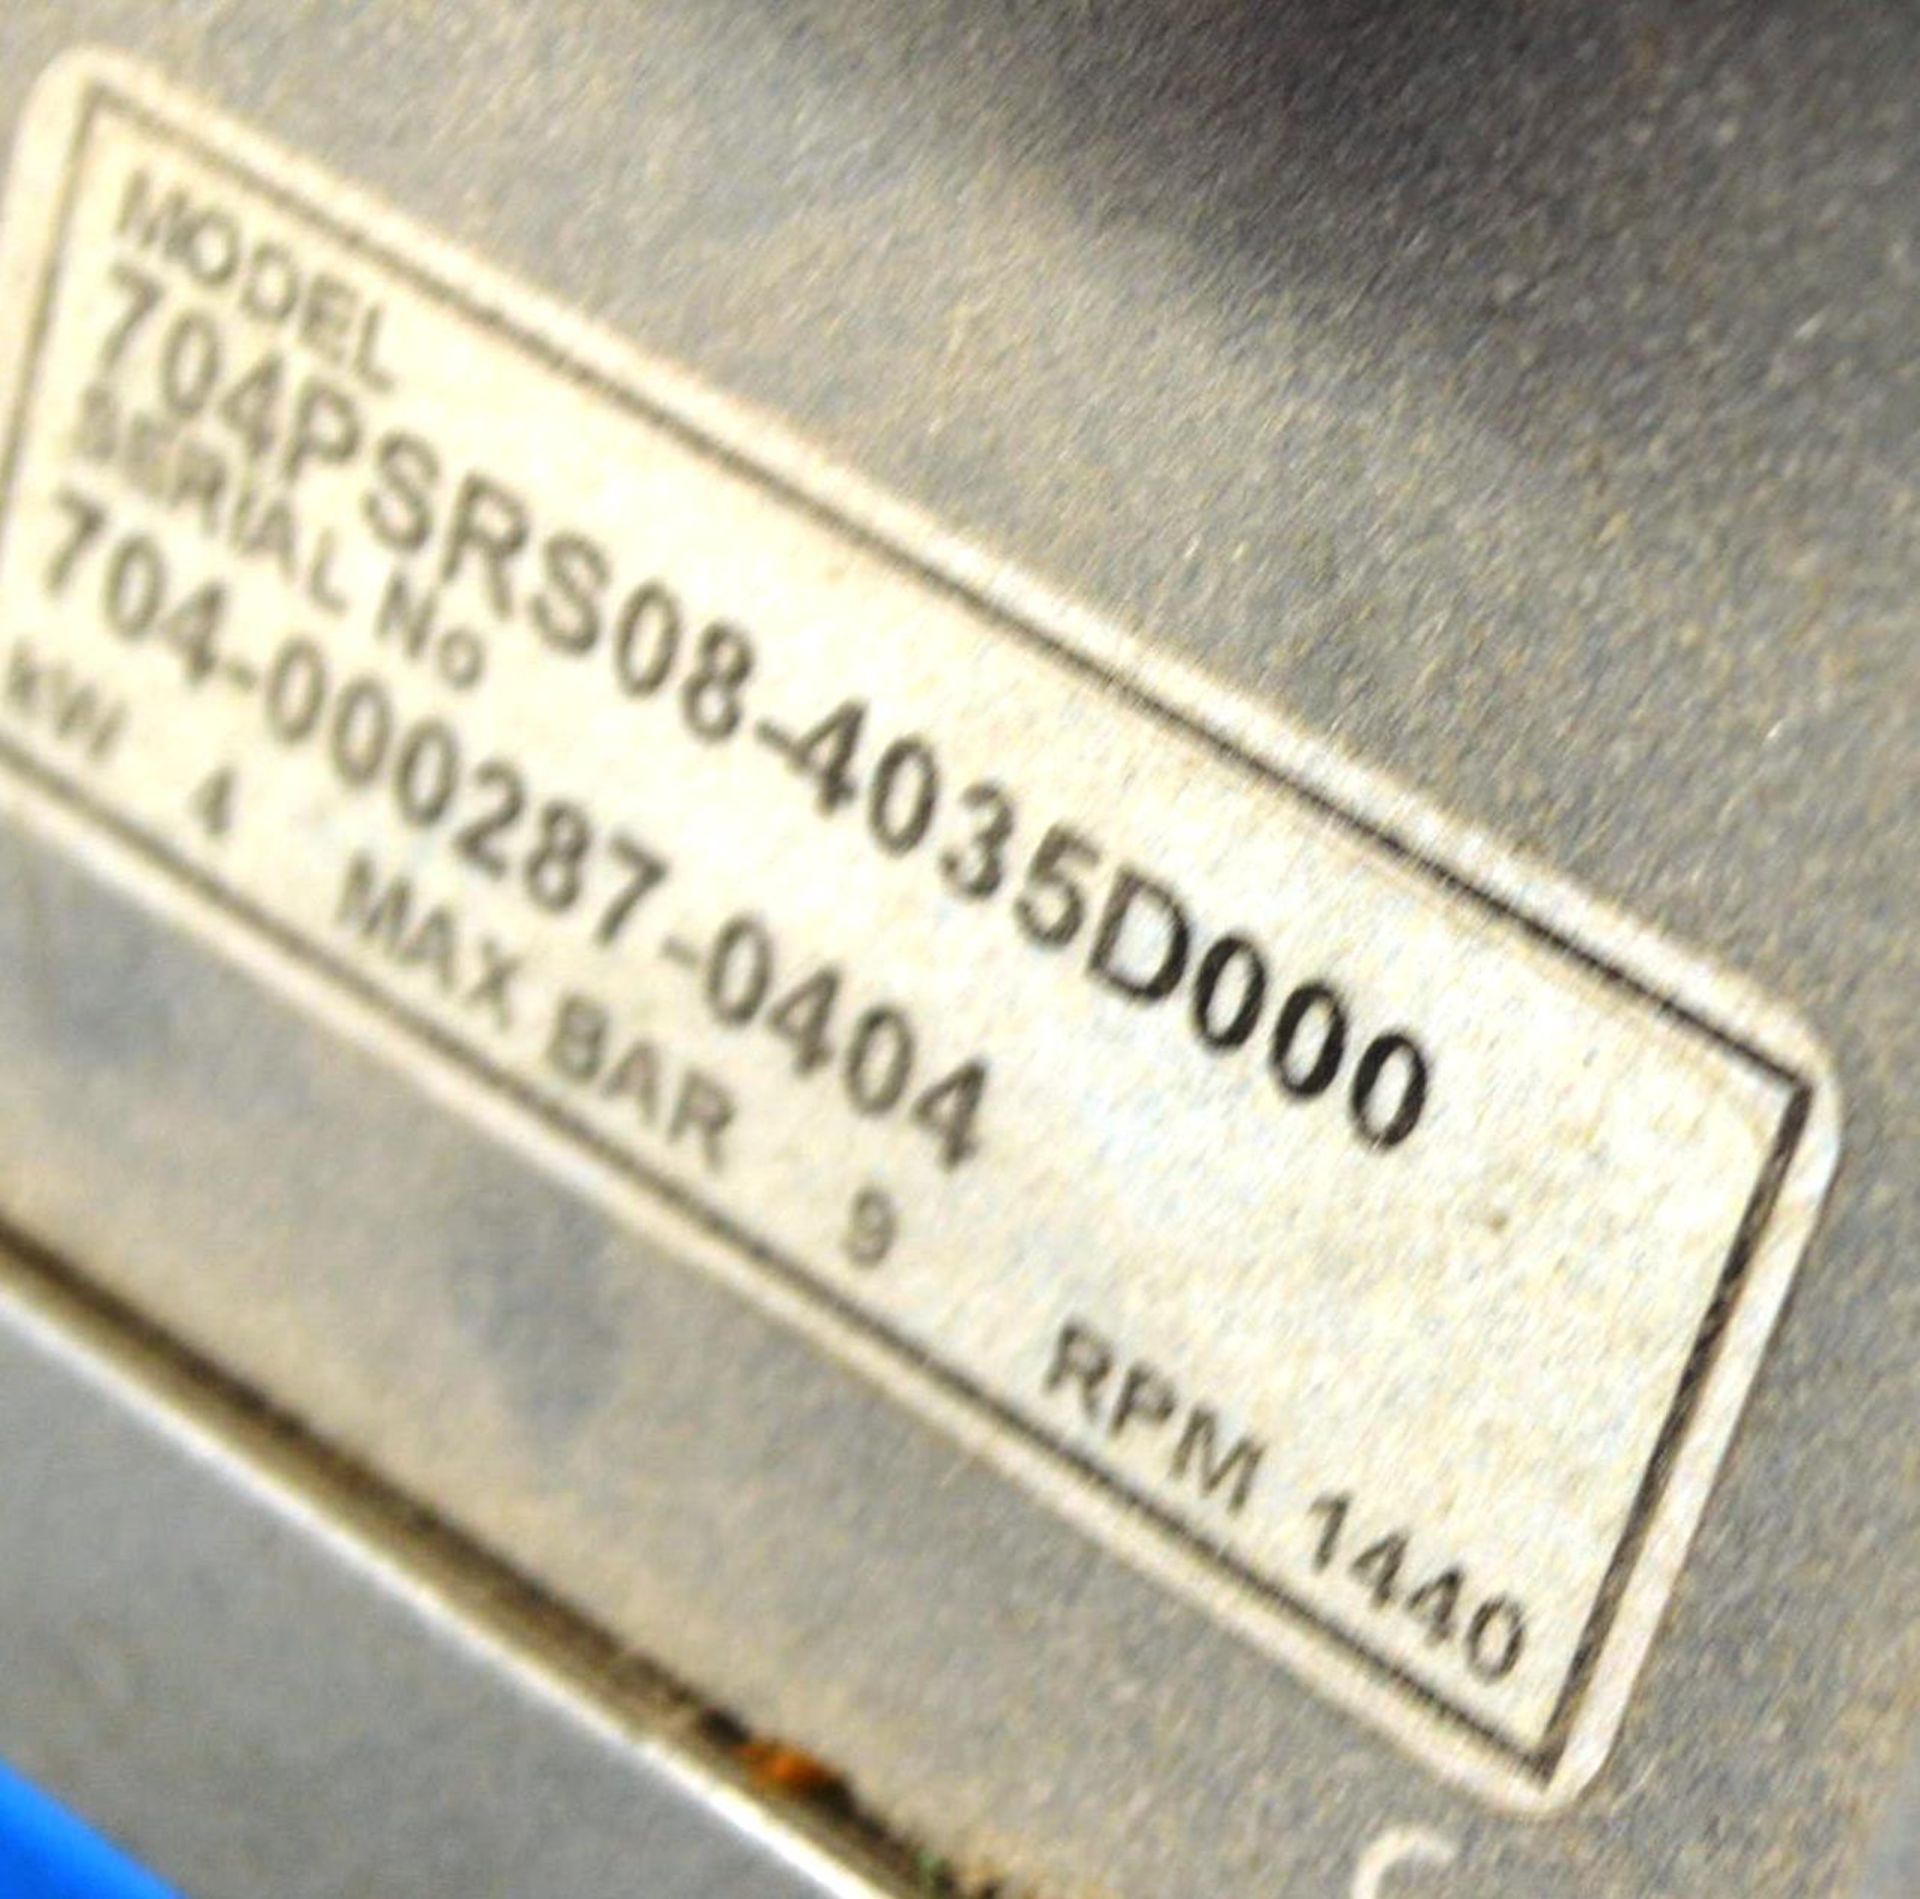 CompAir 704PSR08-4035D000 Horizontal Receiver Mounted Air Compressor, serial no. 704-000 287 - - Image 2 of 2